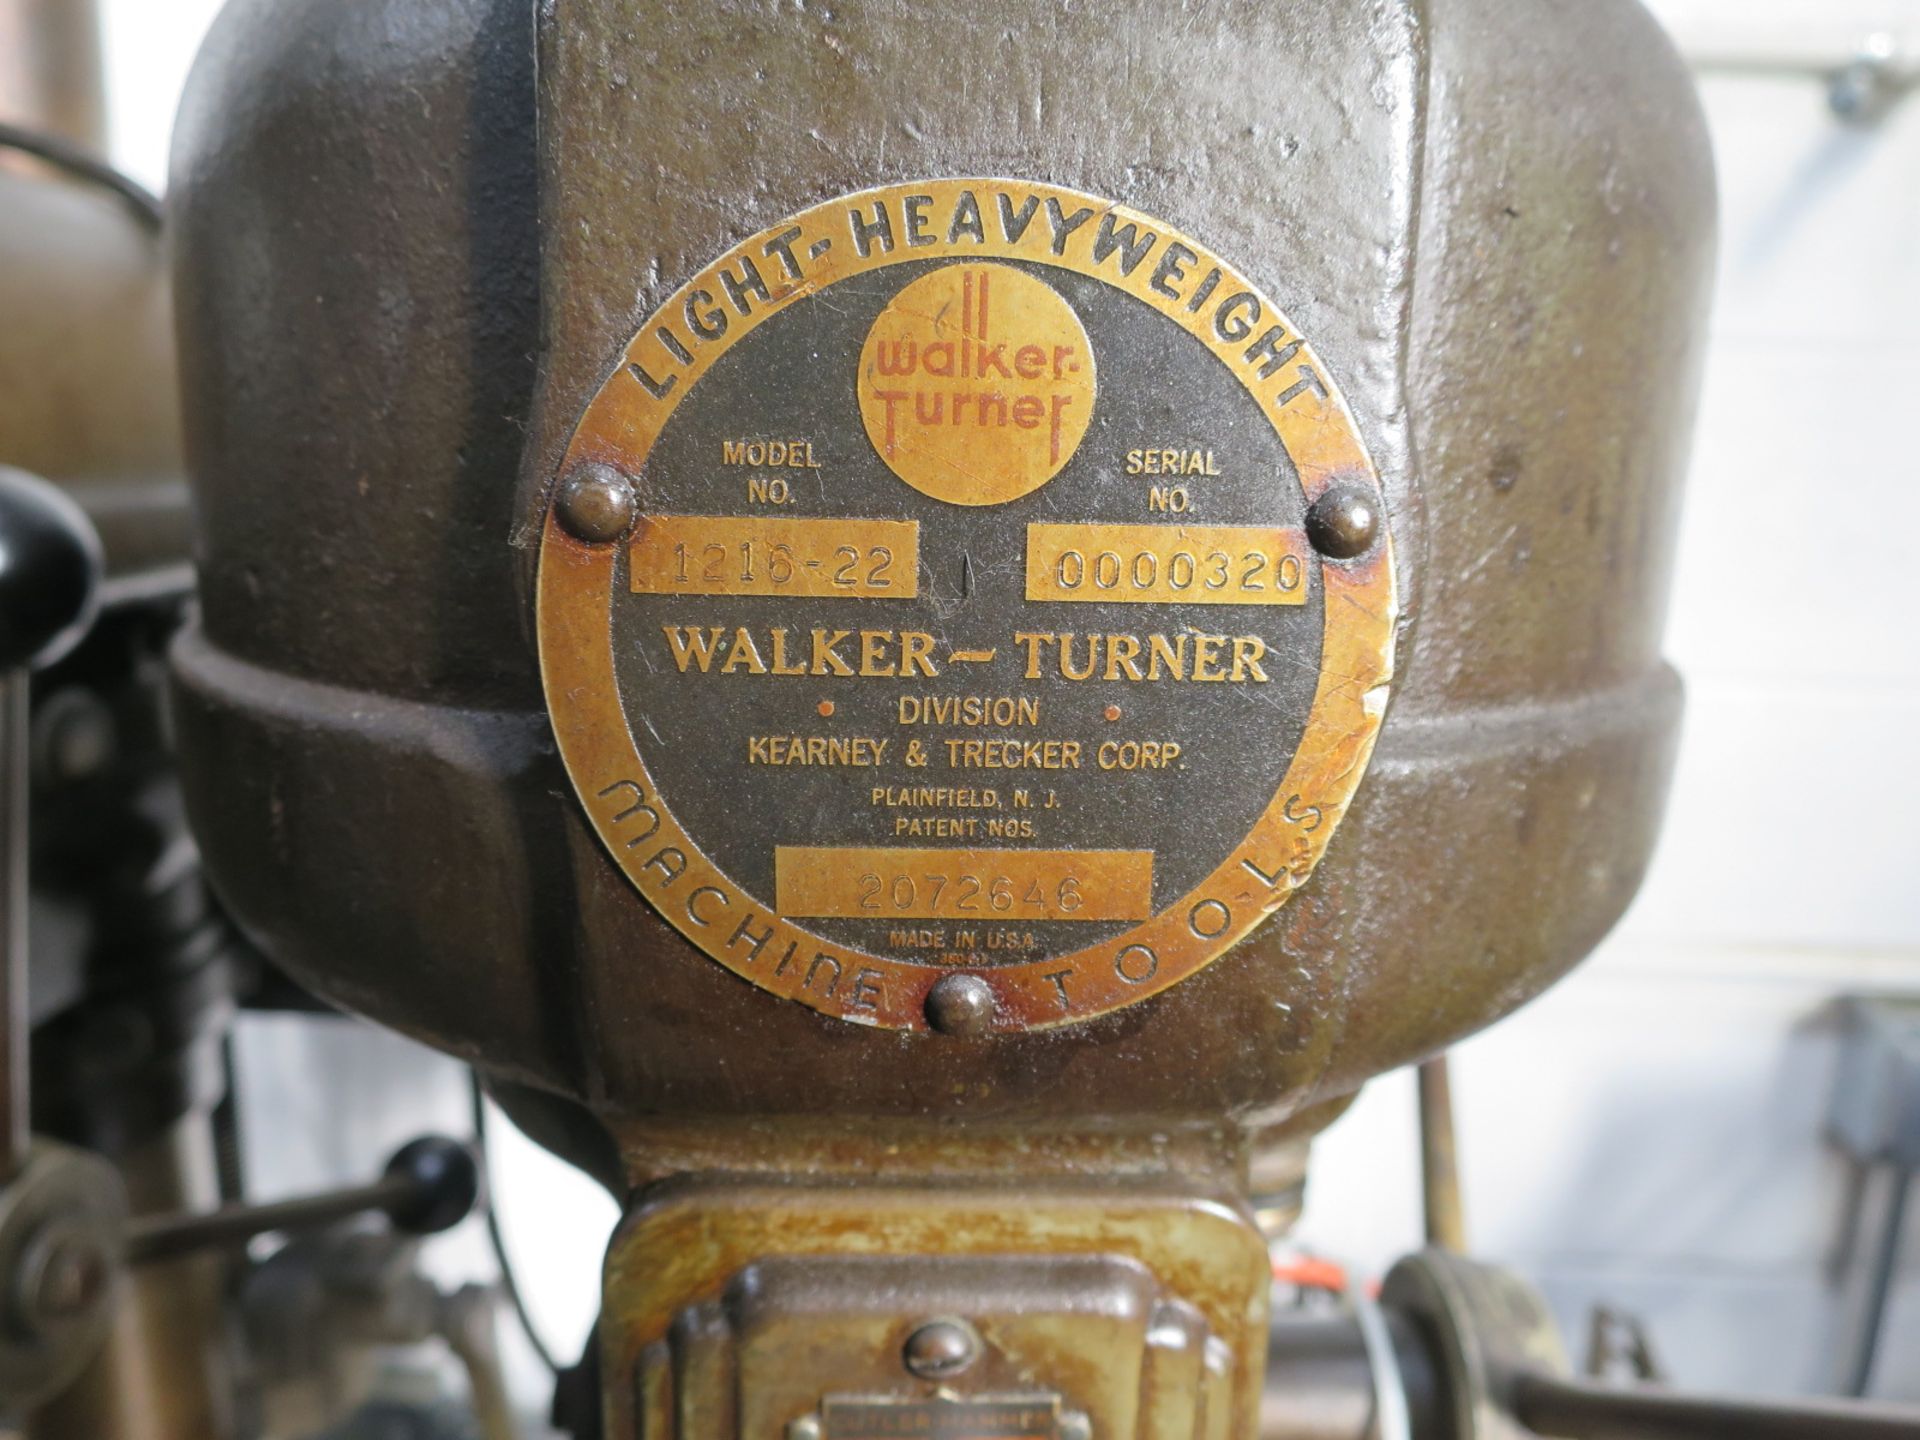 Dual Head Walker Turner Drill Press Model 1216-22, SN 321, 320 - Image 3 of 5